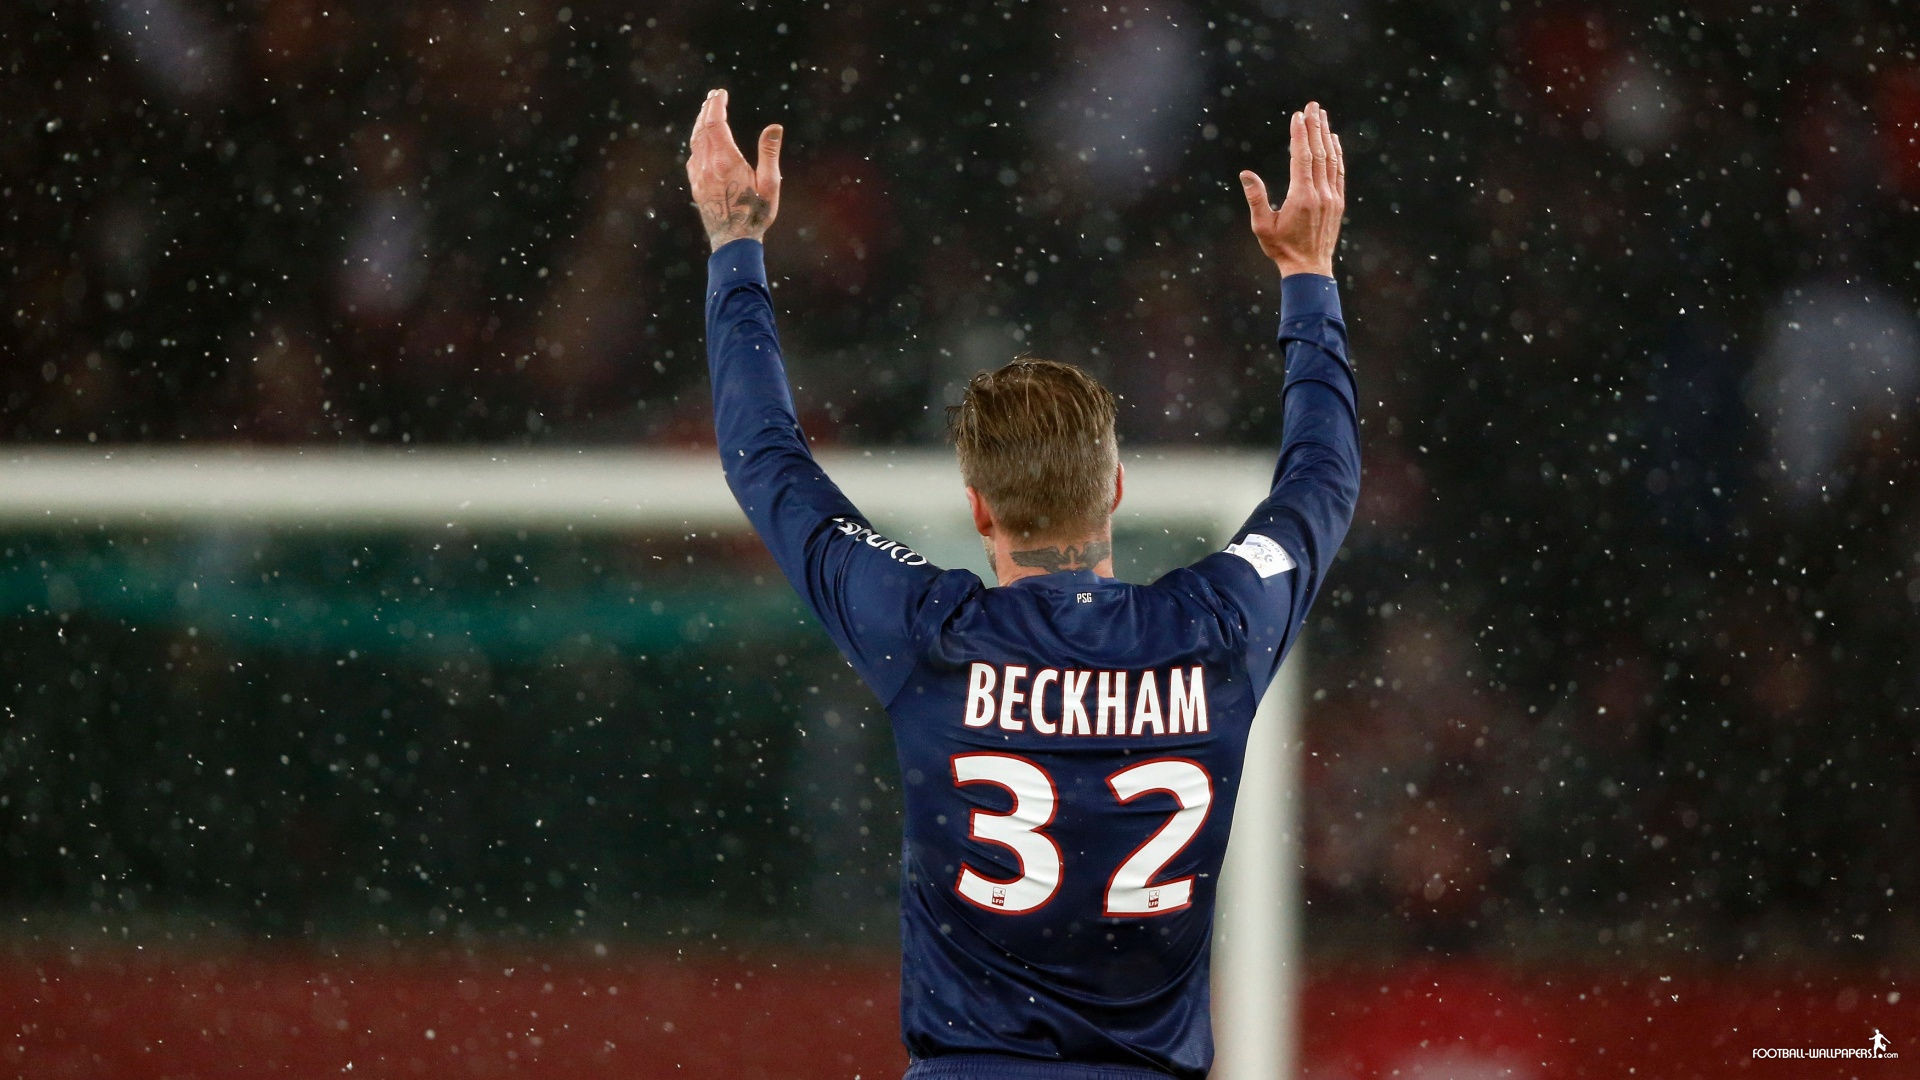 David Beckham Hd 1080p Wallpapers: Players, Teams, Leagues Wallpapers